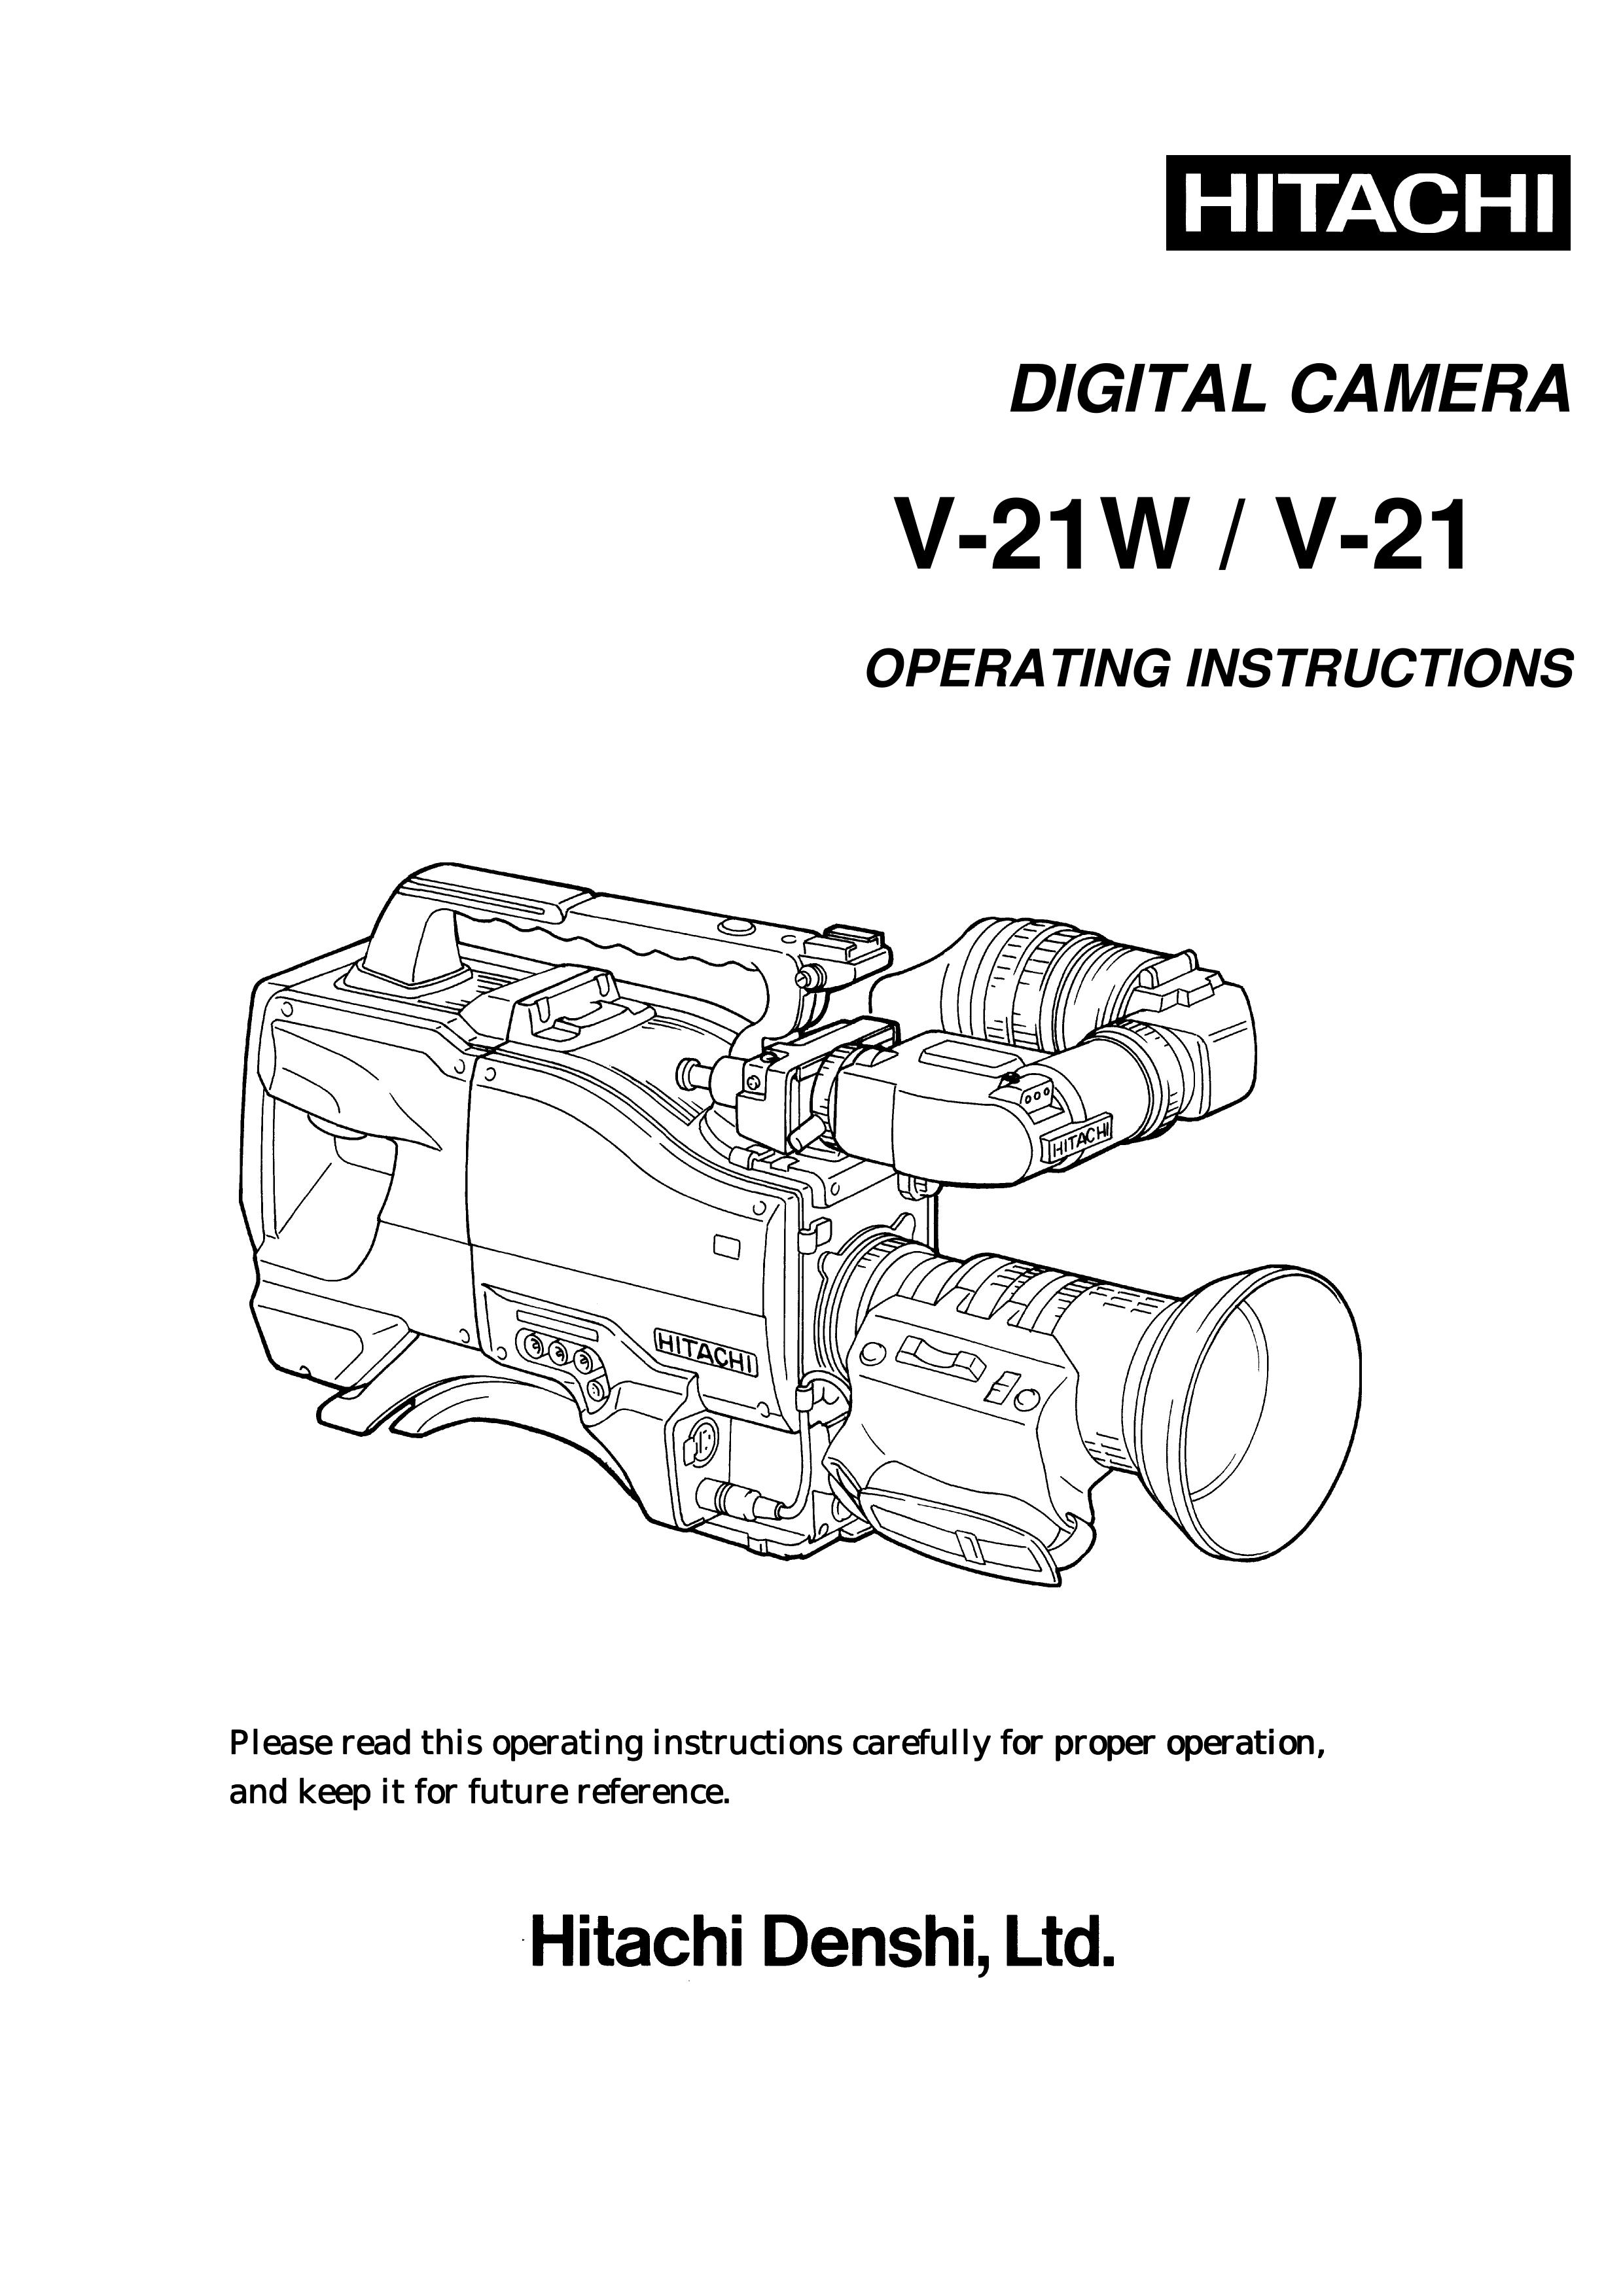 Hitachi V-21W Digital Camera User Manual